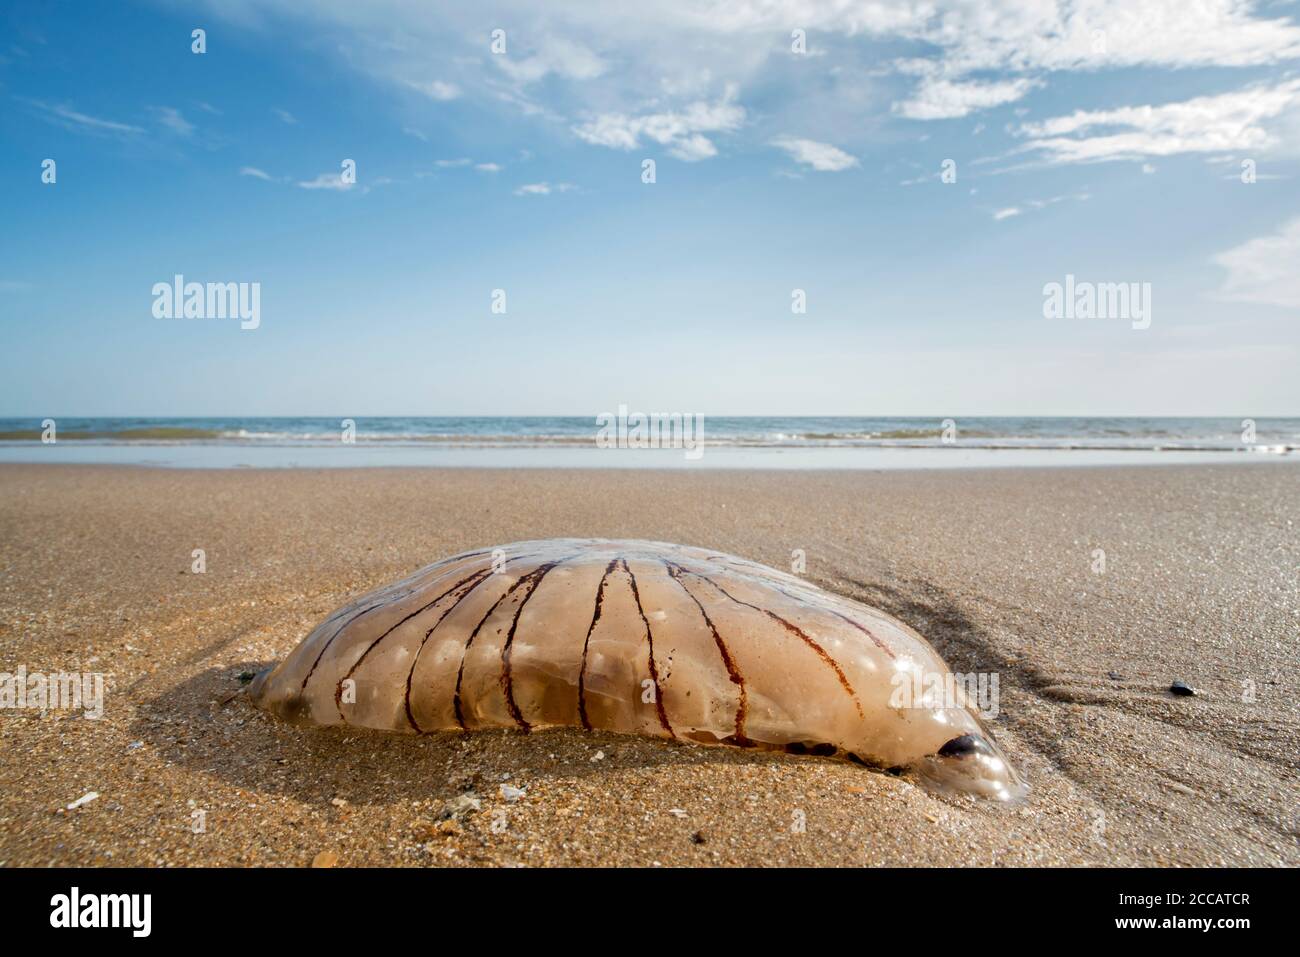 Compass jellyfish (Chrysaora hysoscella) washed ashore on sandy beach along the North Sea coast Stock Photo